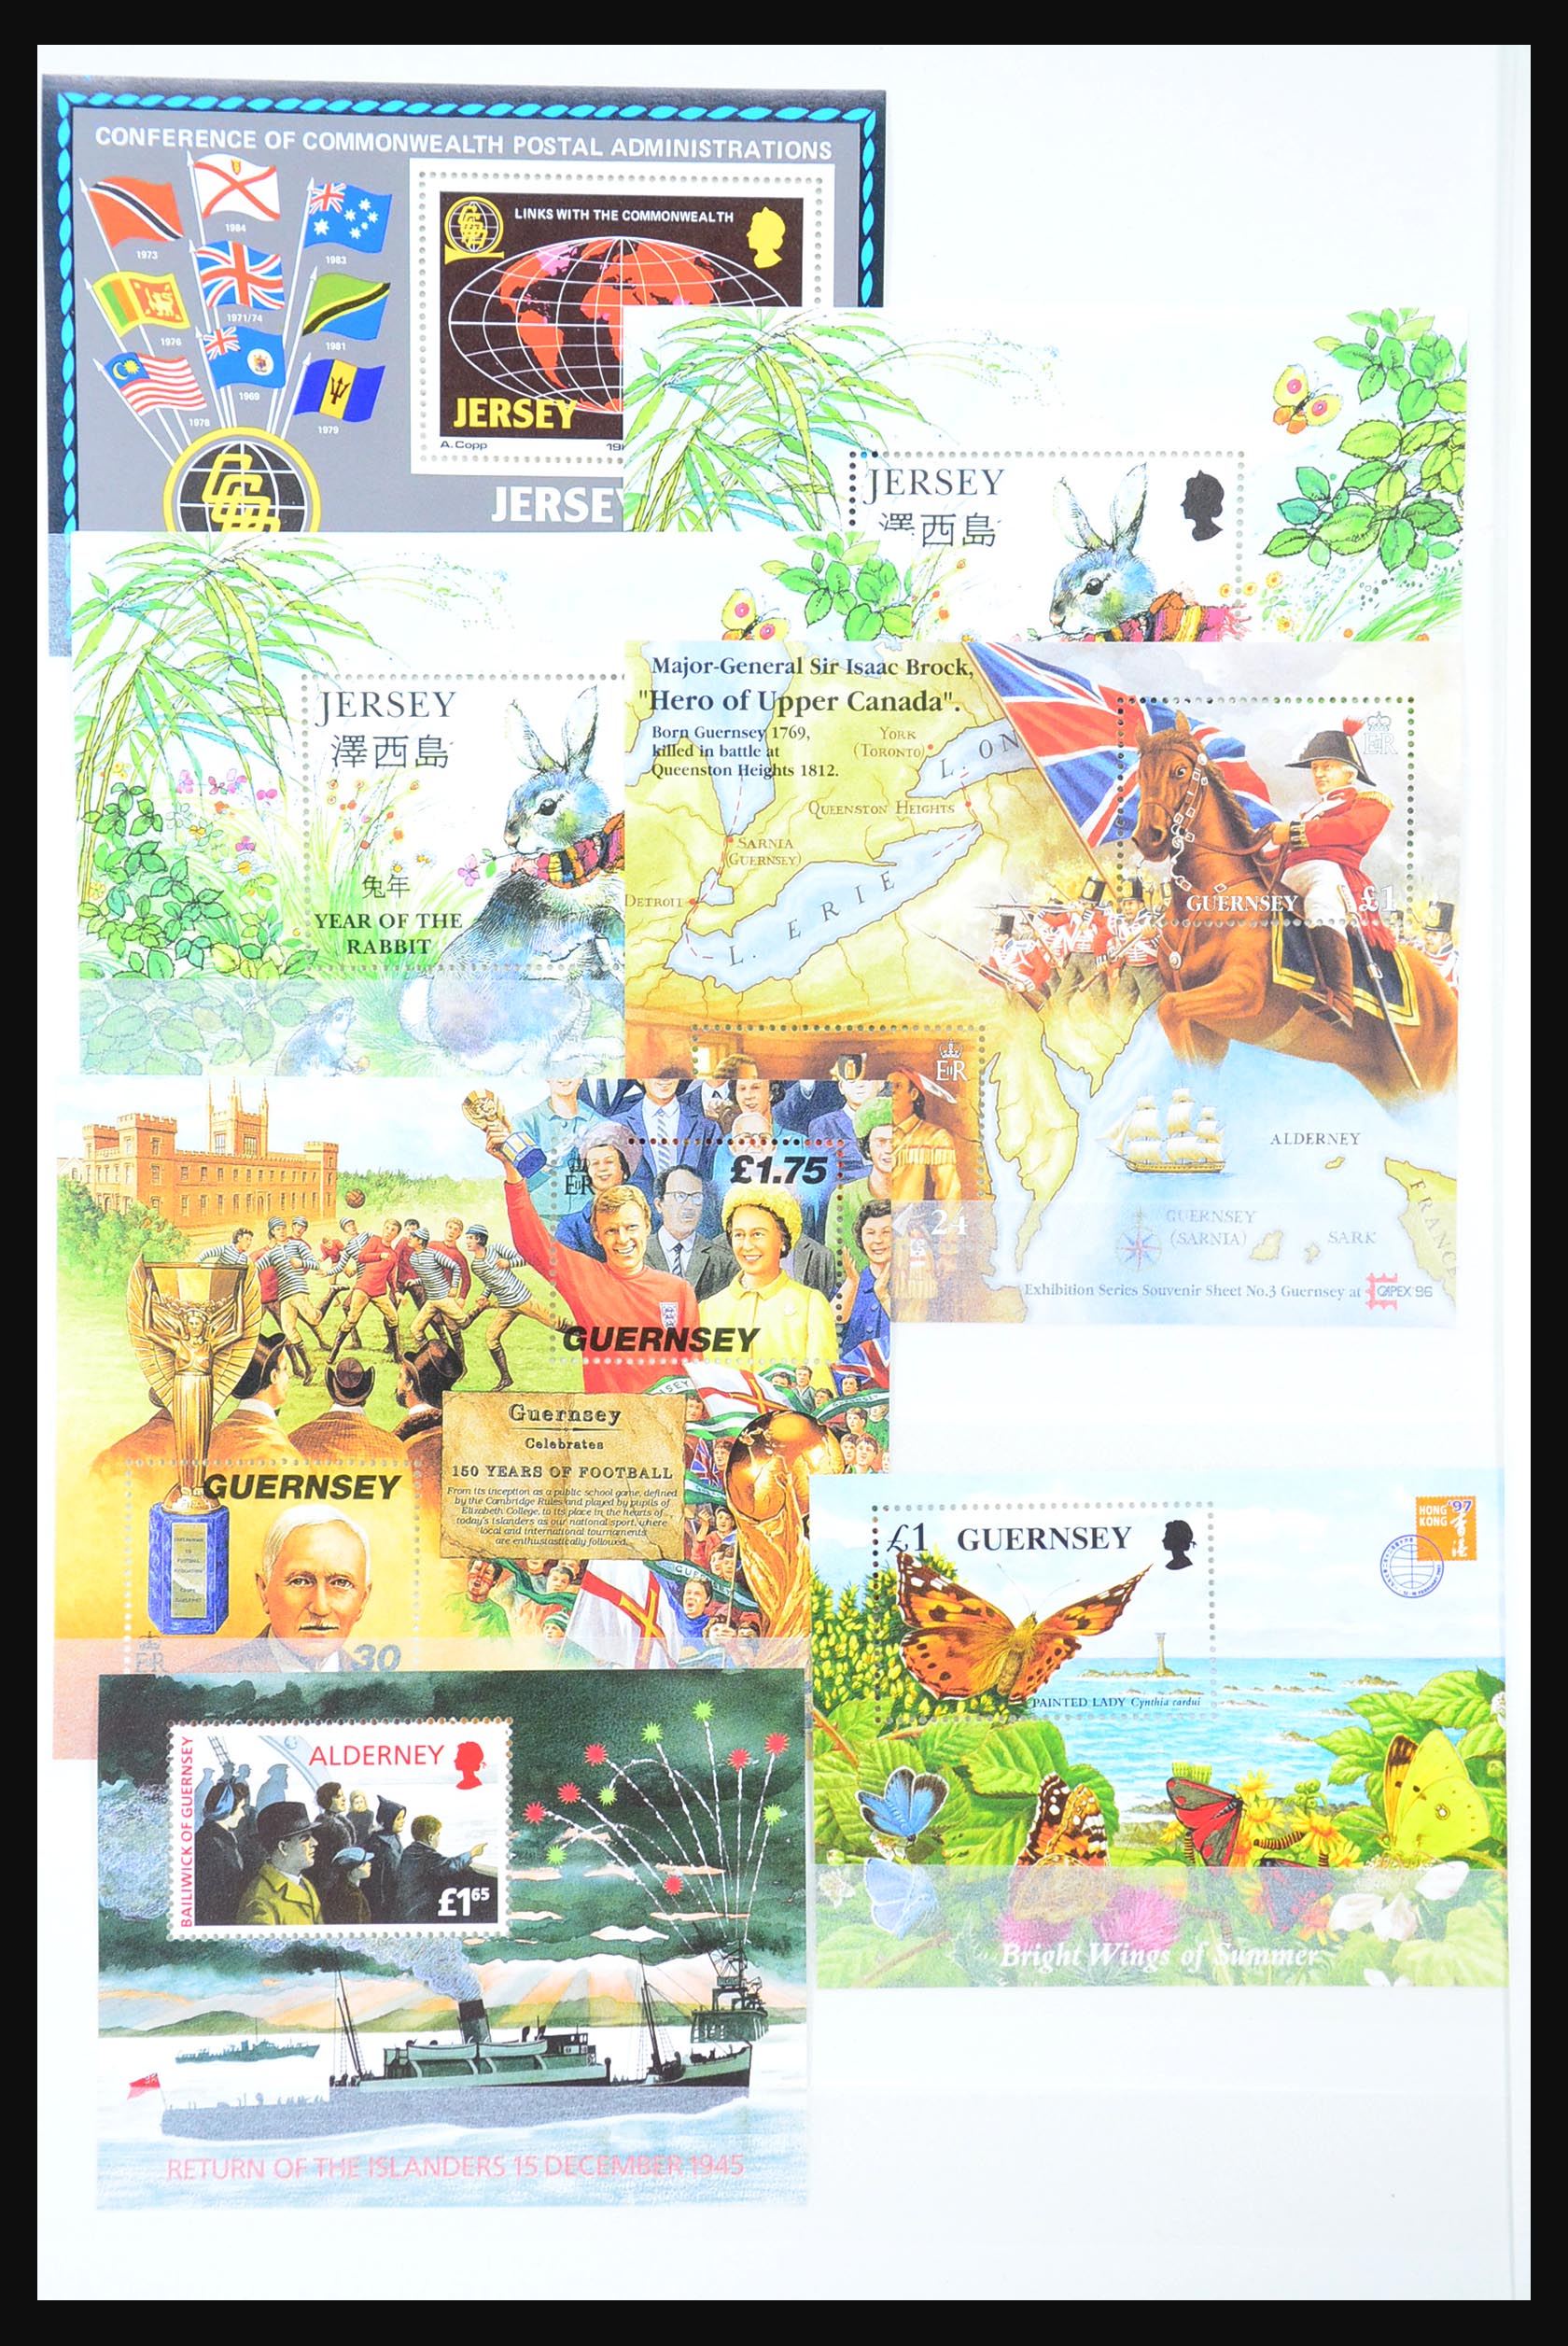 31249 042 - 31249 Channel Islands souvenir sheets and sheetlets 1978-1997.